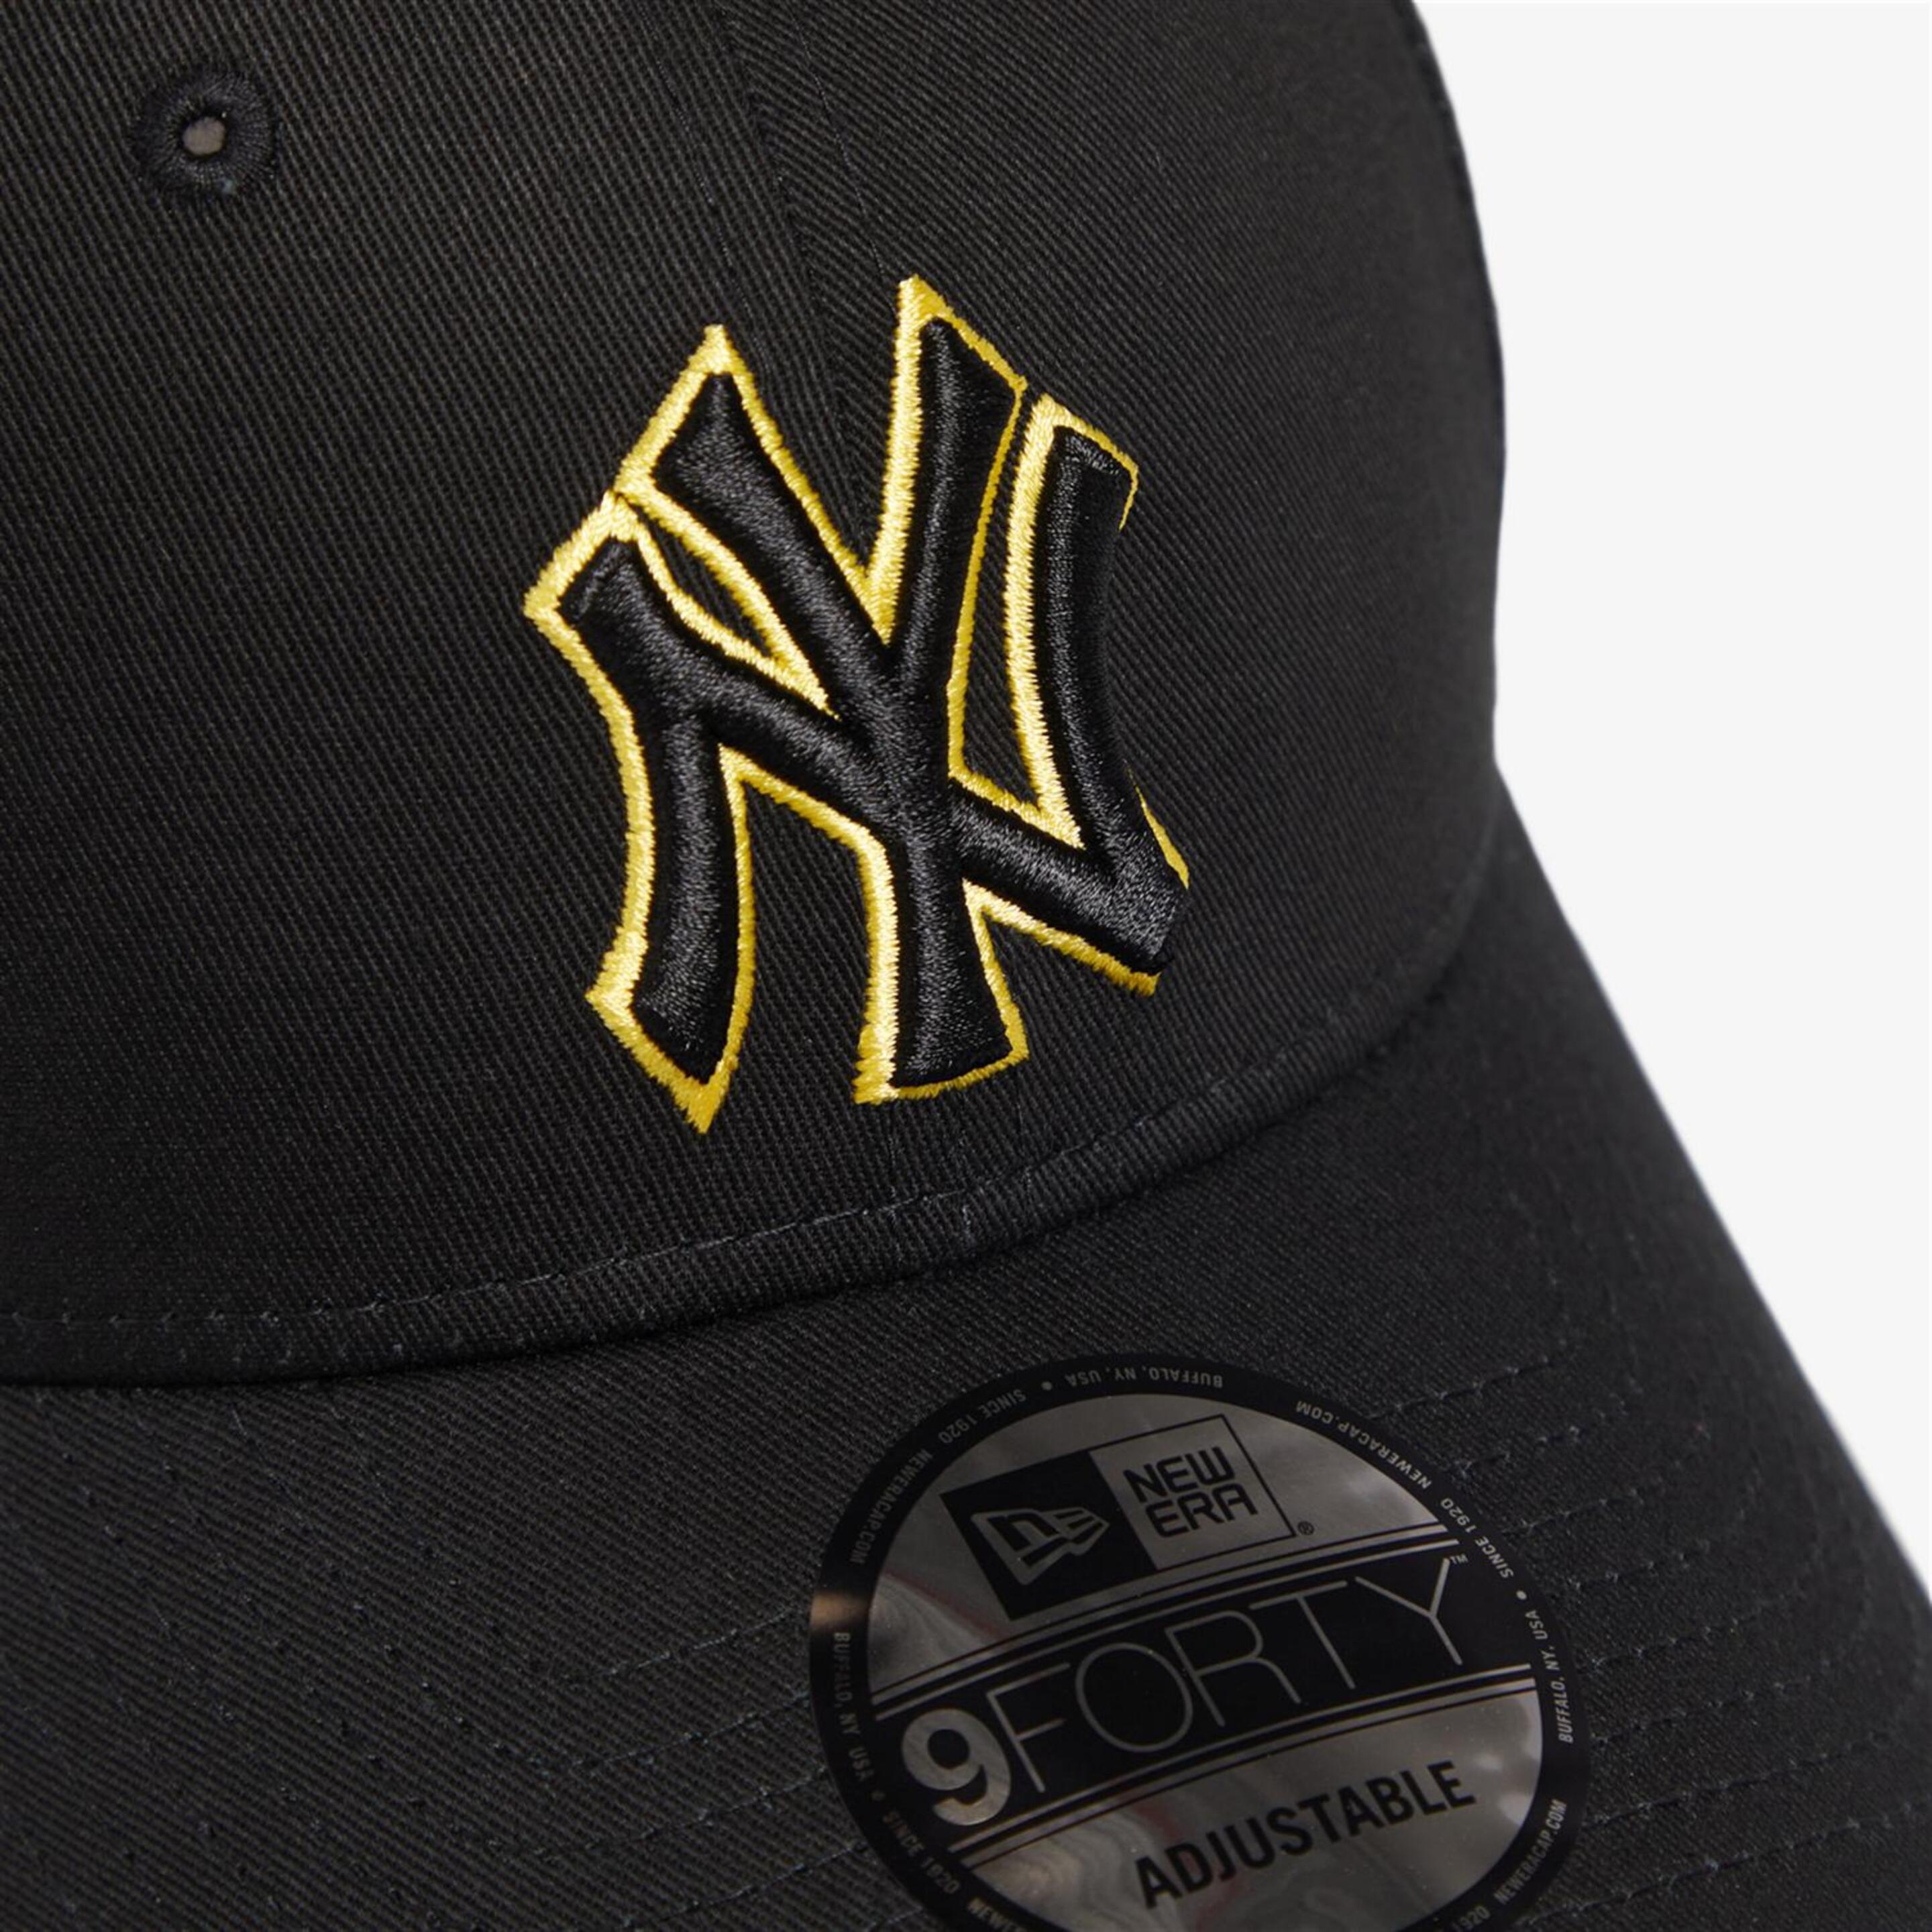 New Era NY Yankees - Preto - Boné | Sport Zone